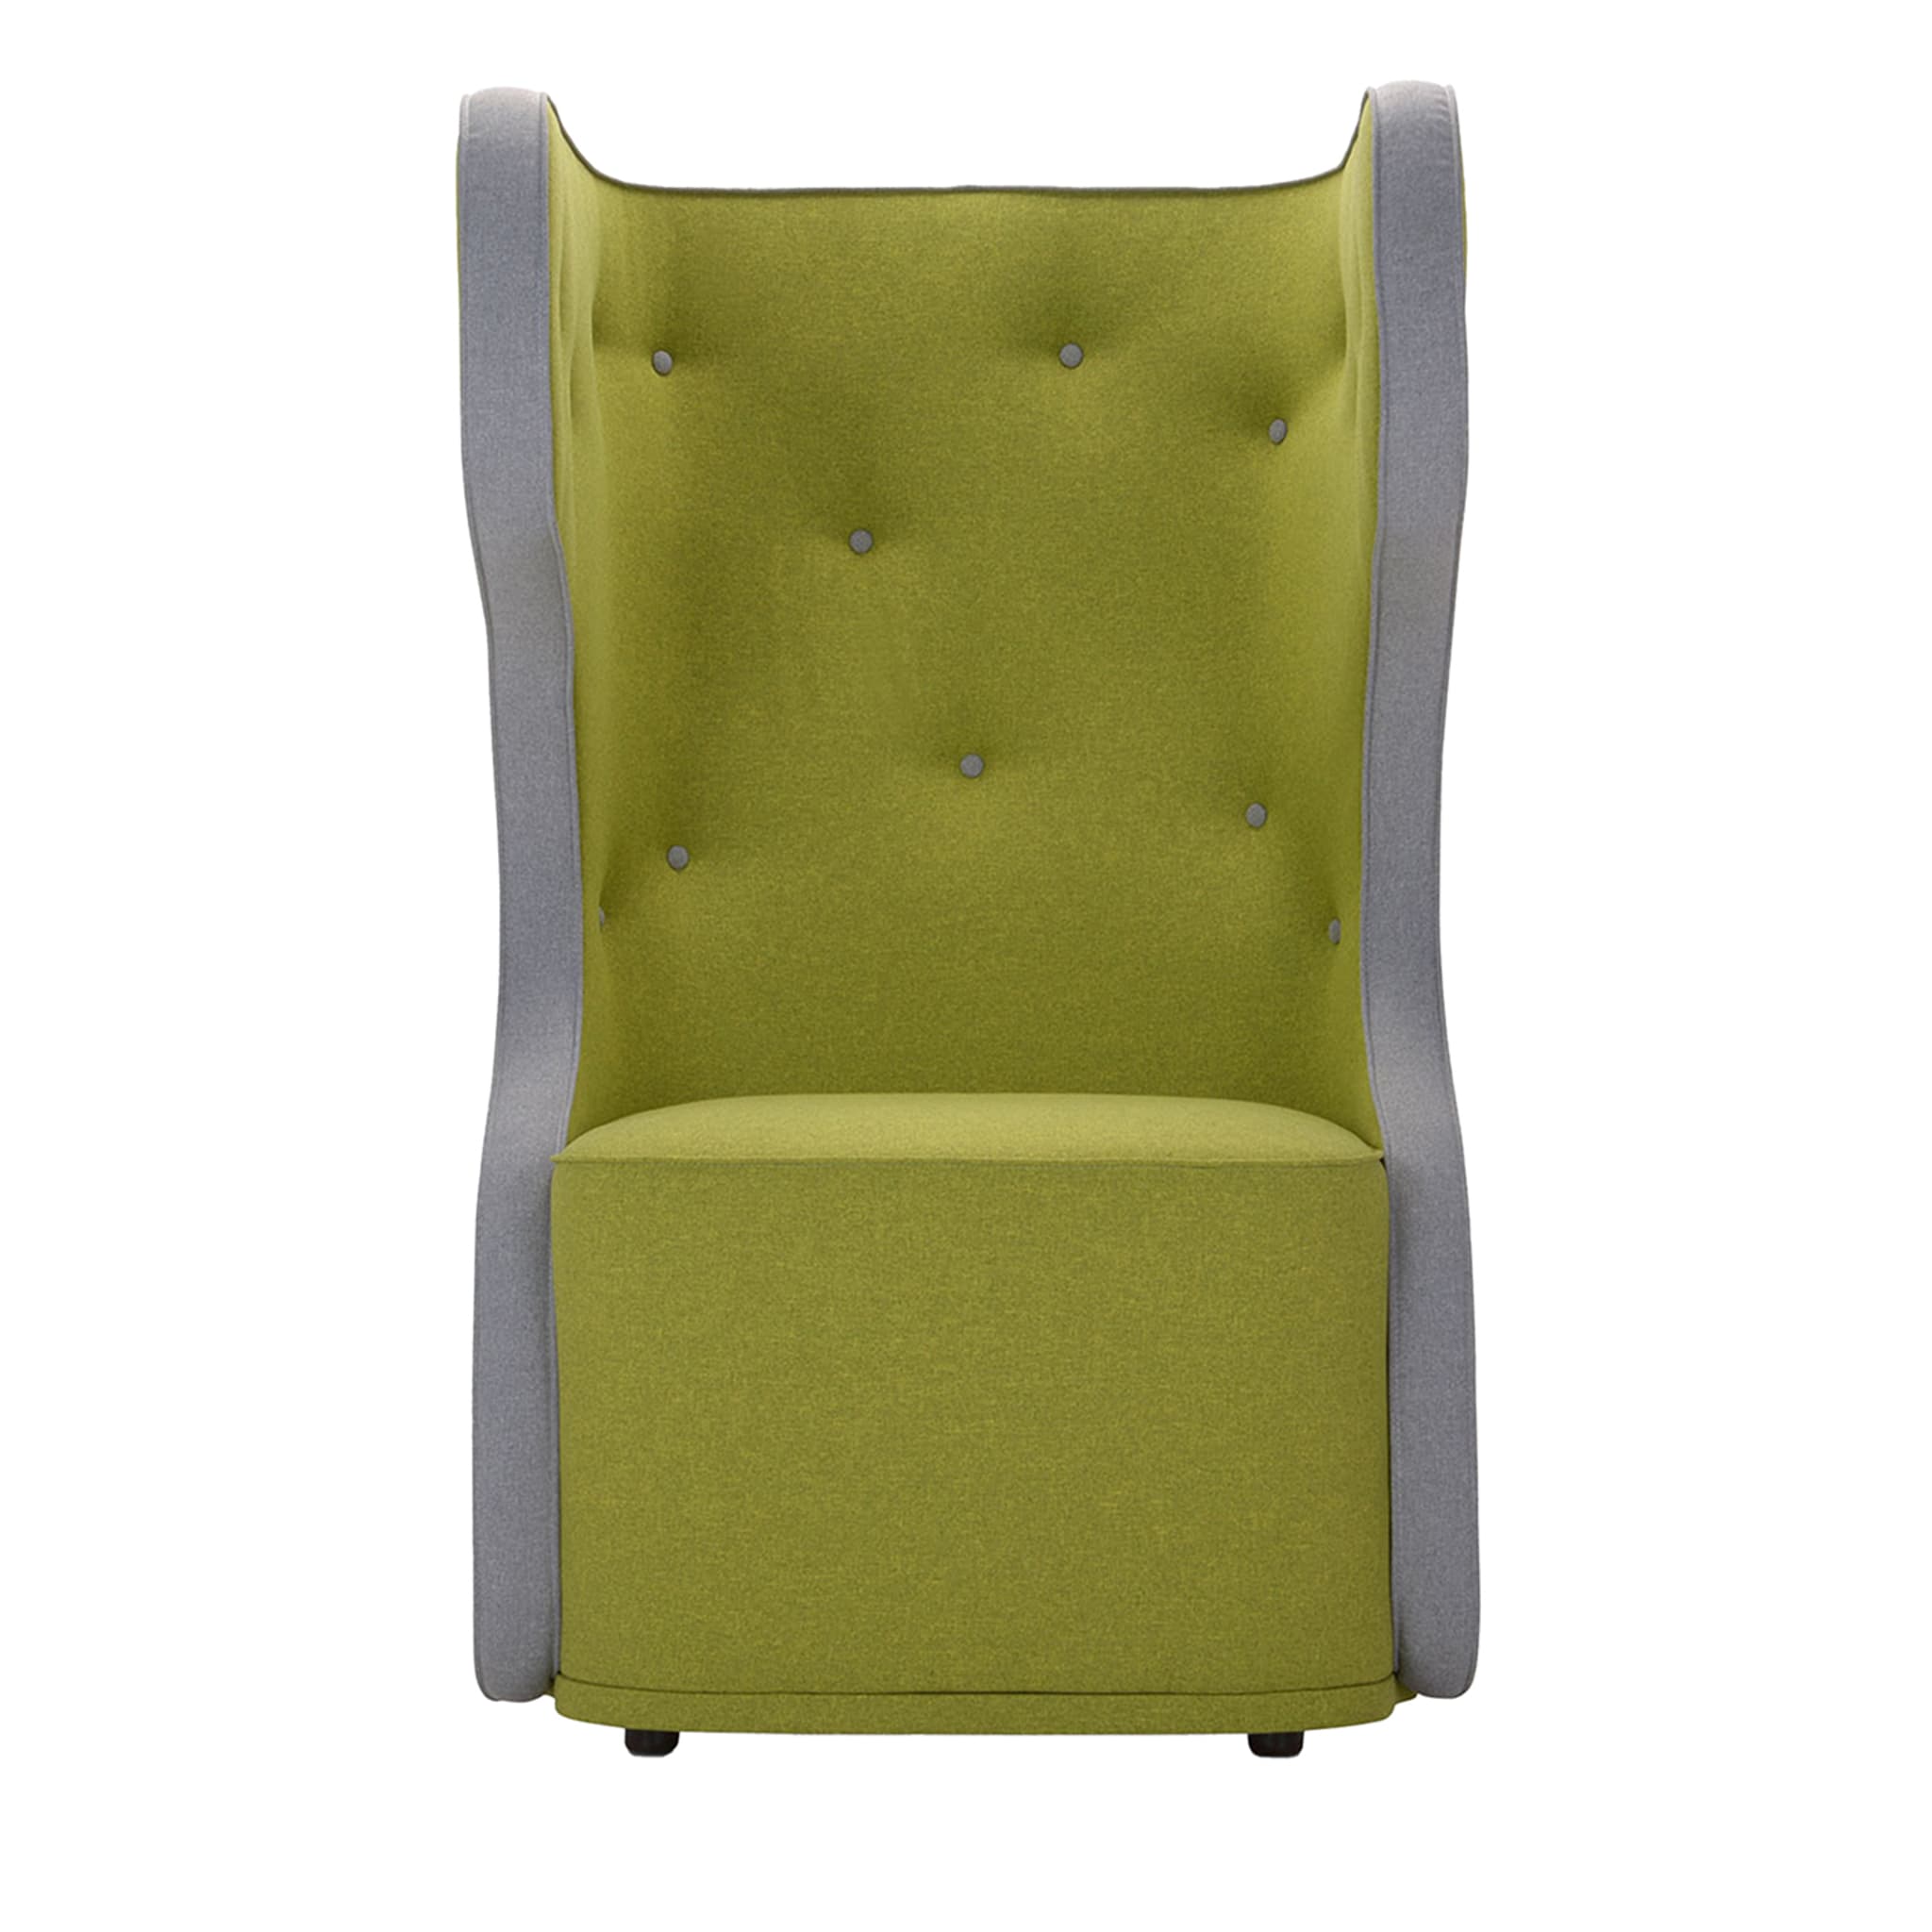 Wow Green & Gray Armchair by Simone Micheli - Main view